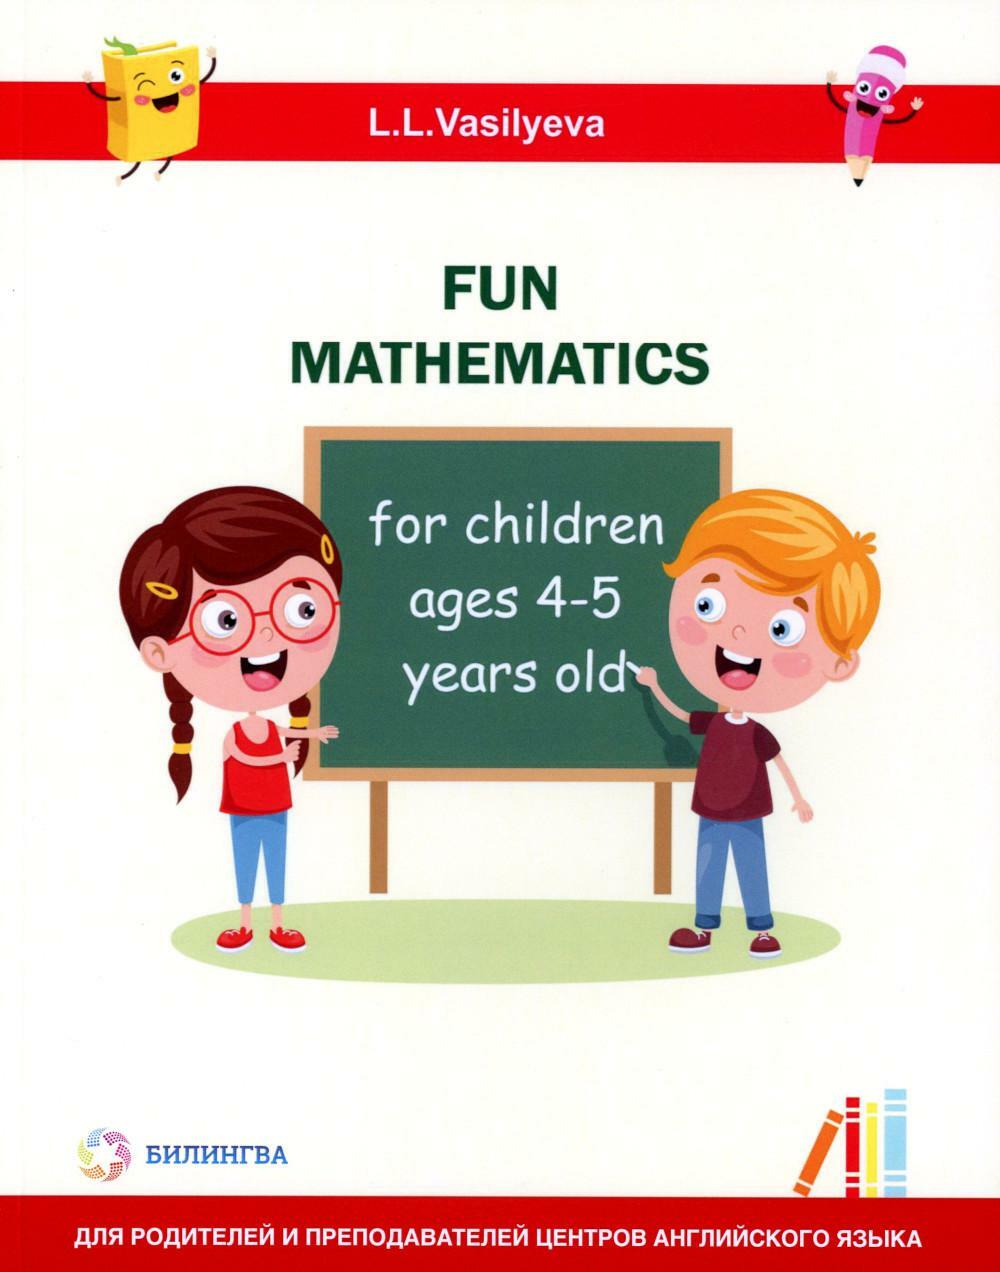 Занимательная математика для детей 4-5 лет (Fun mathematics for children ages 4-5 years old) кн.на англ.яз